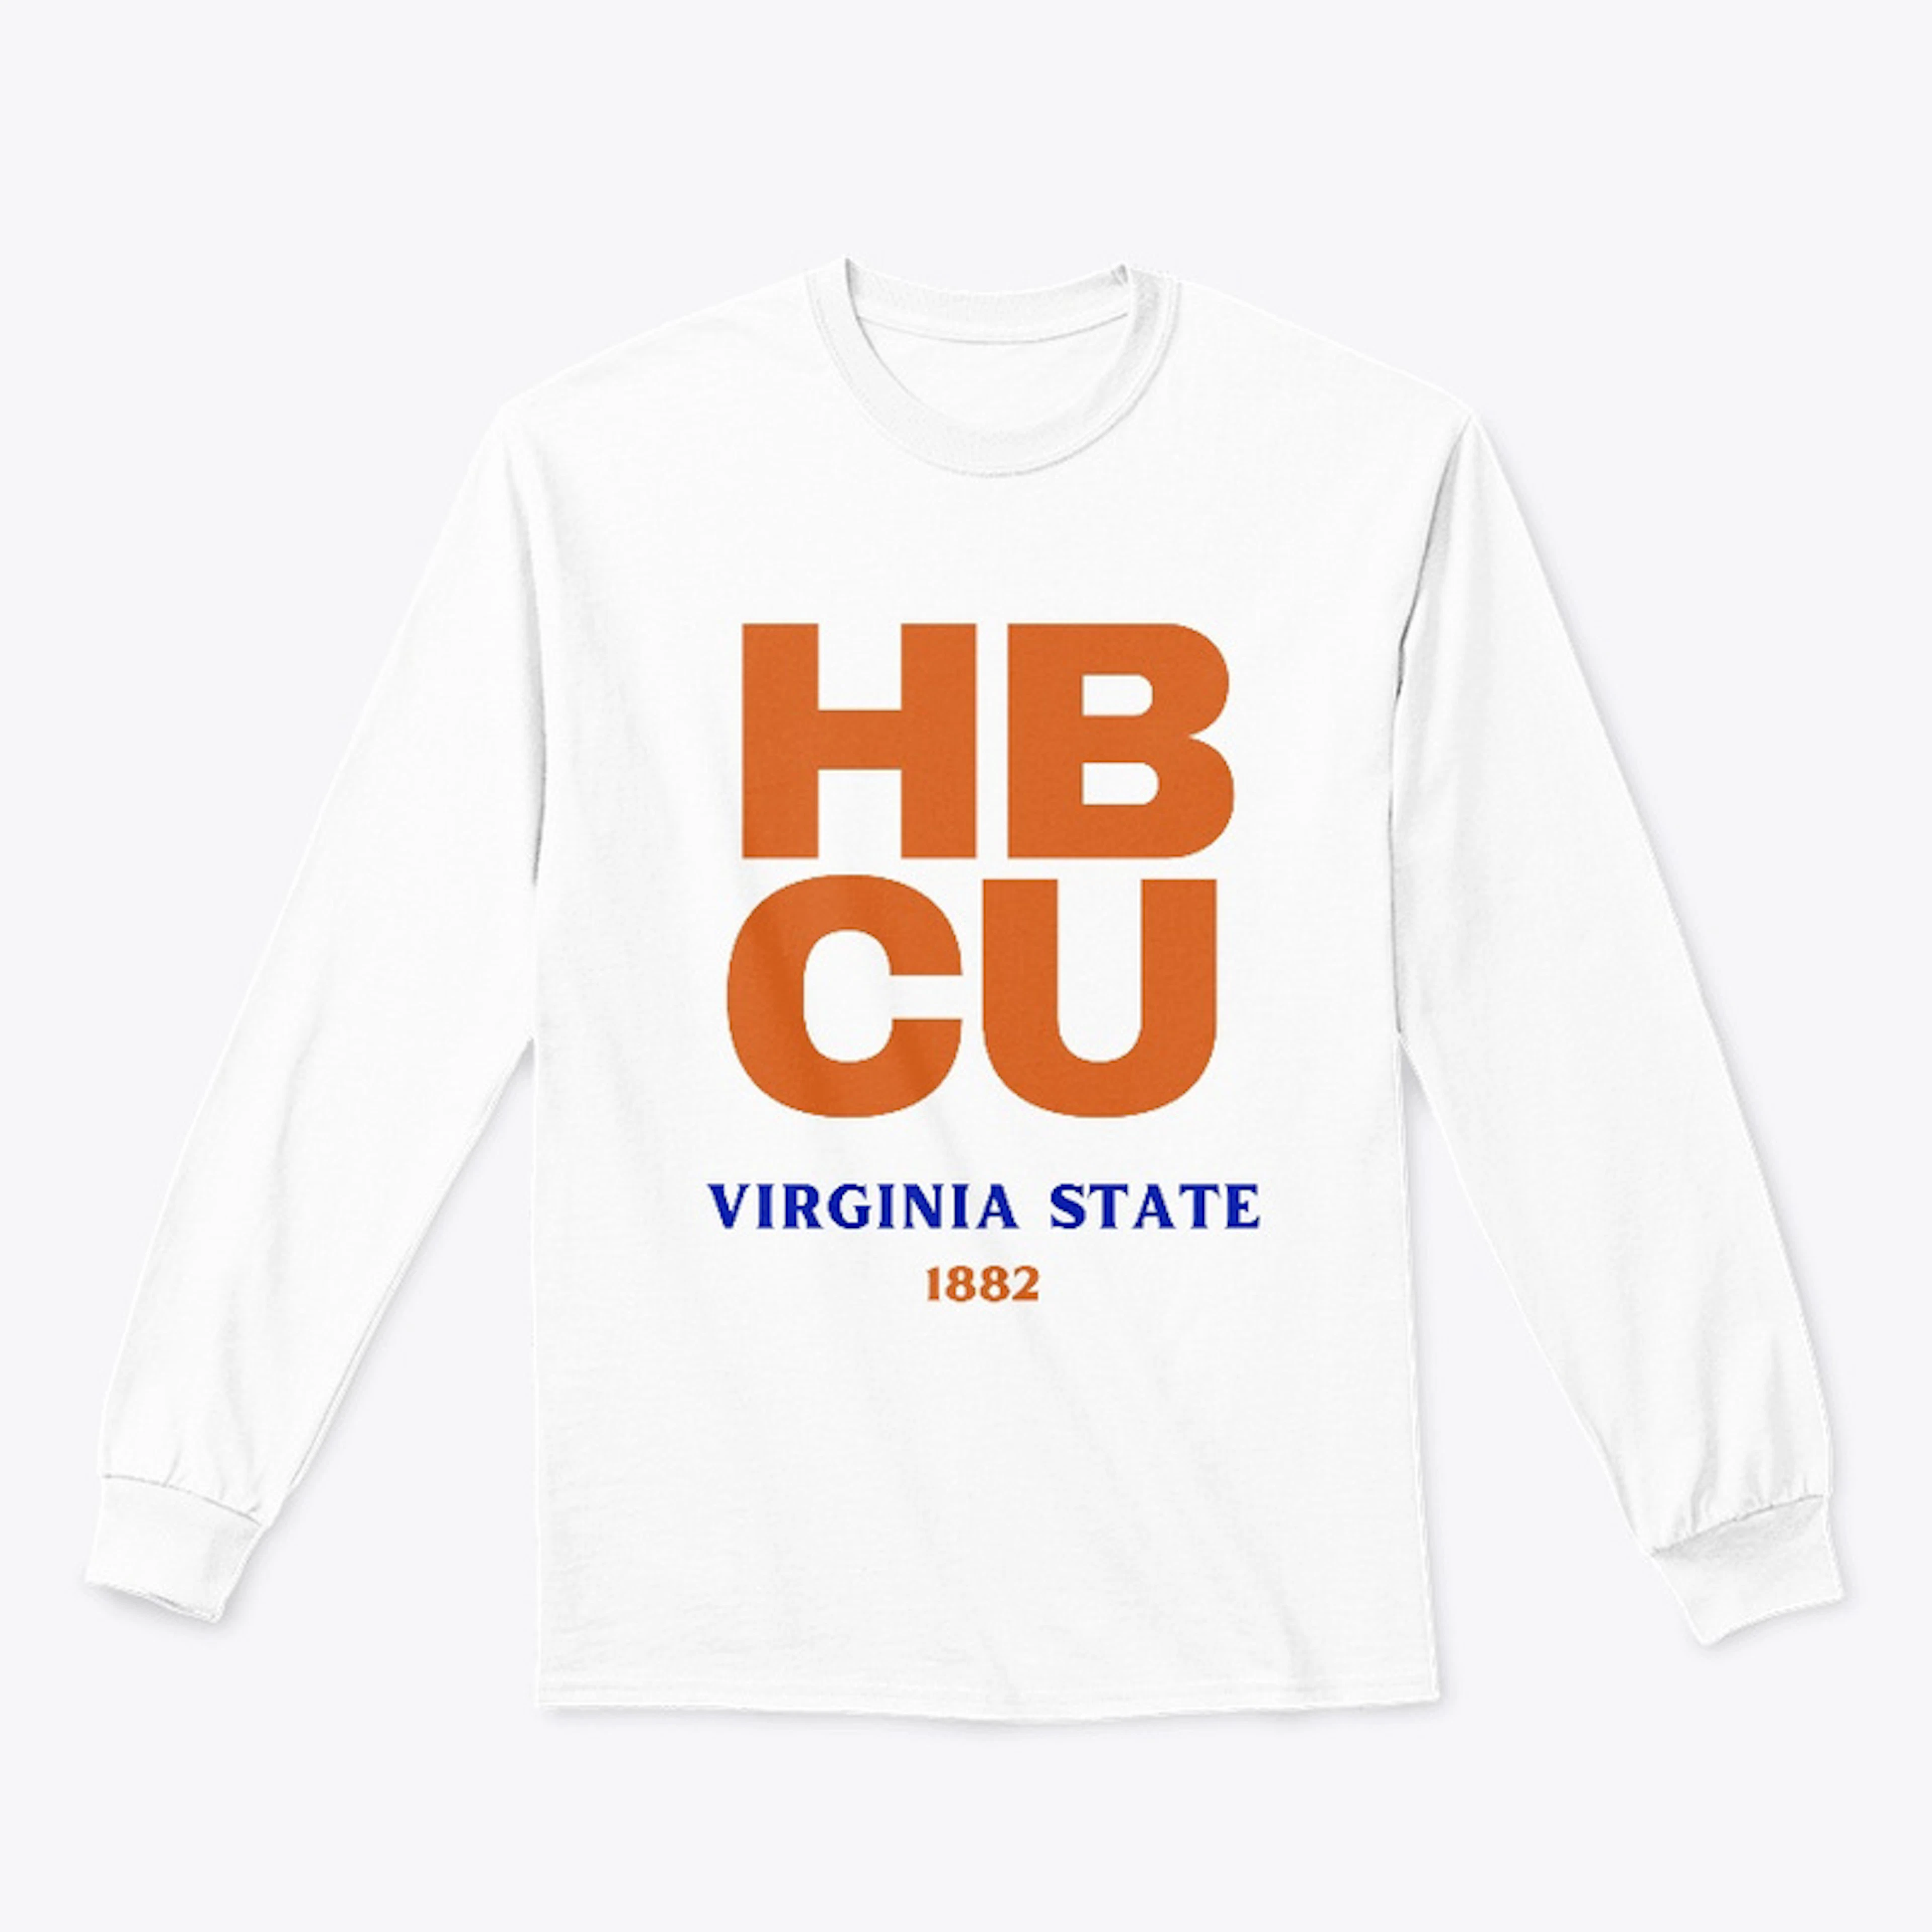 HBCU: Virginia State University